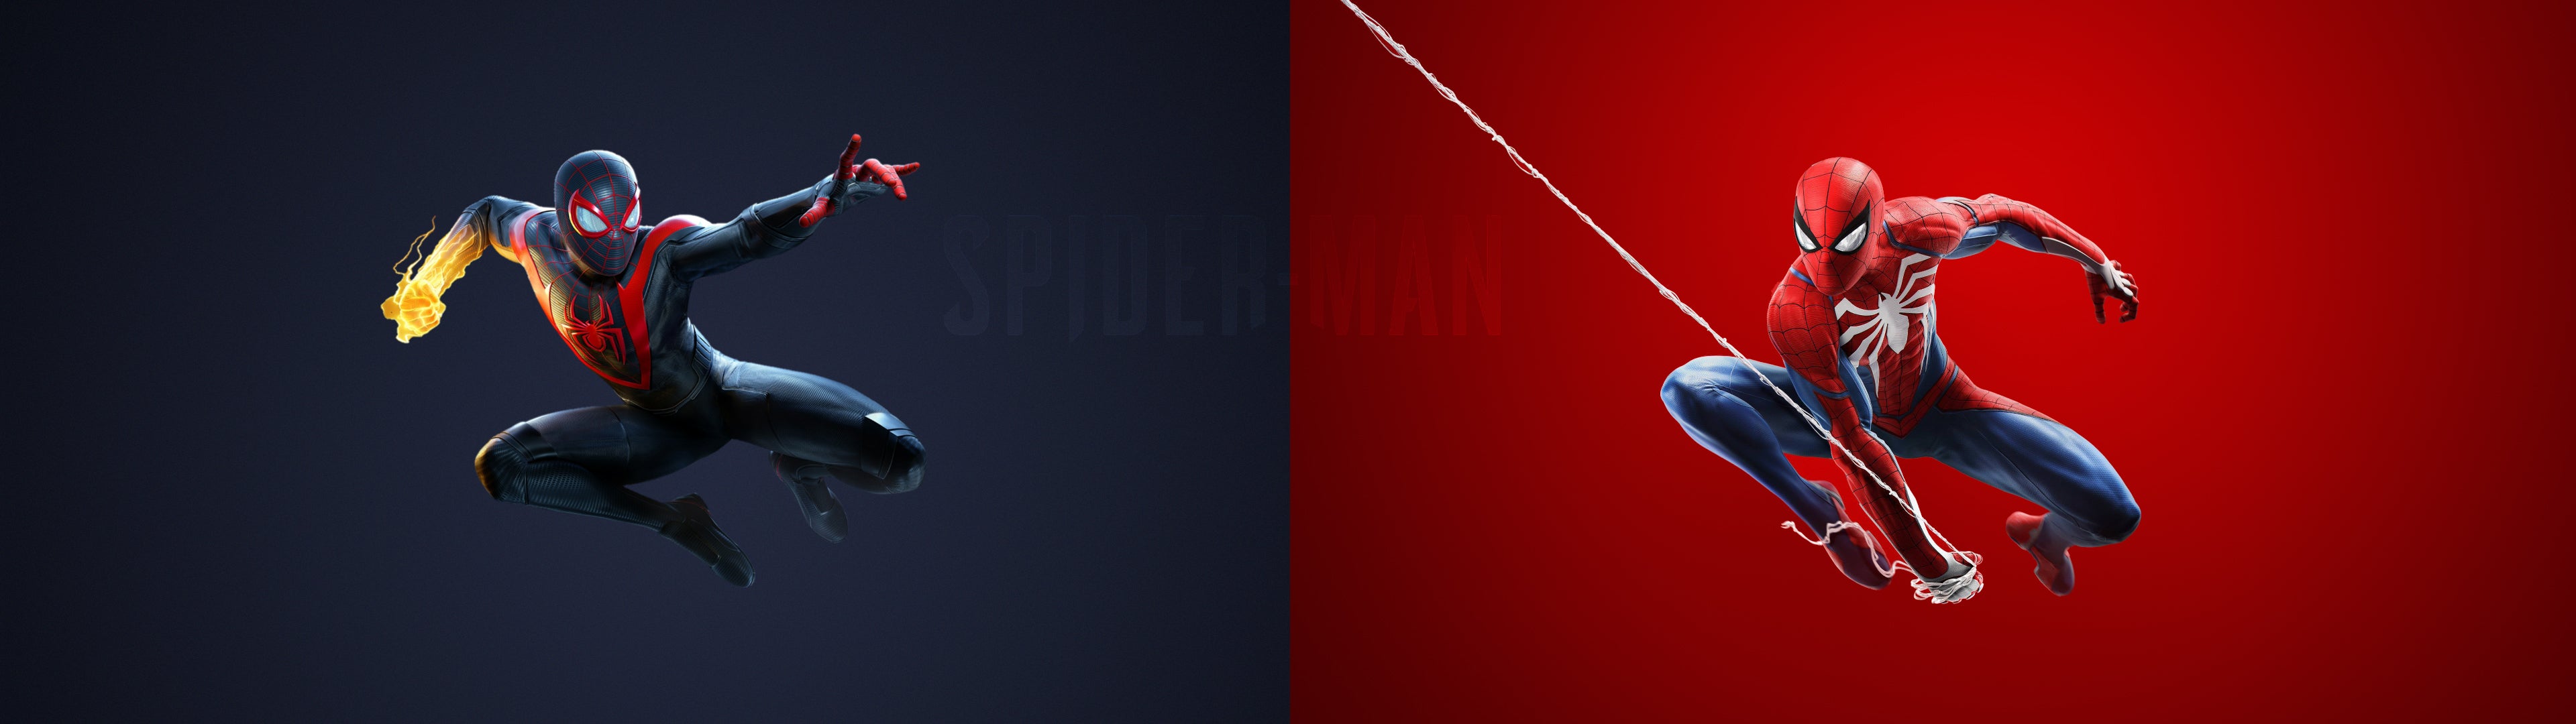 Dual Monitor Spiderman X Miles Morales Ps5 Wallpaper